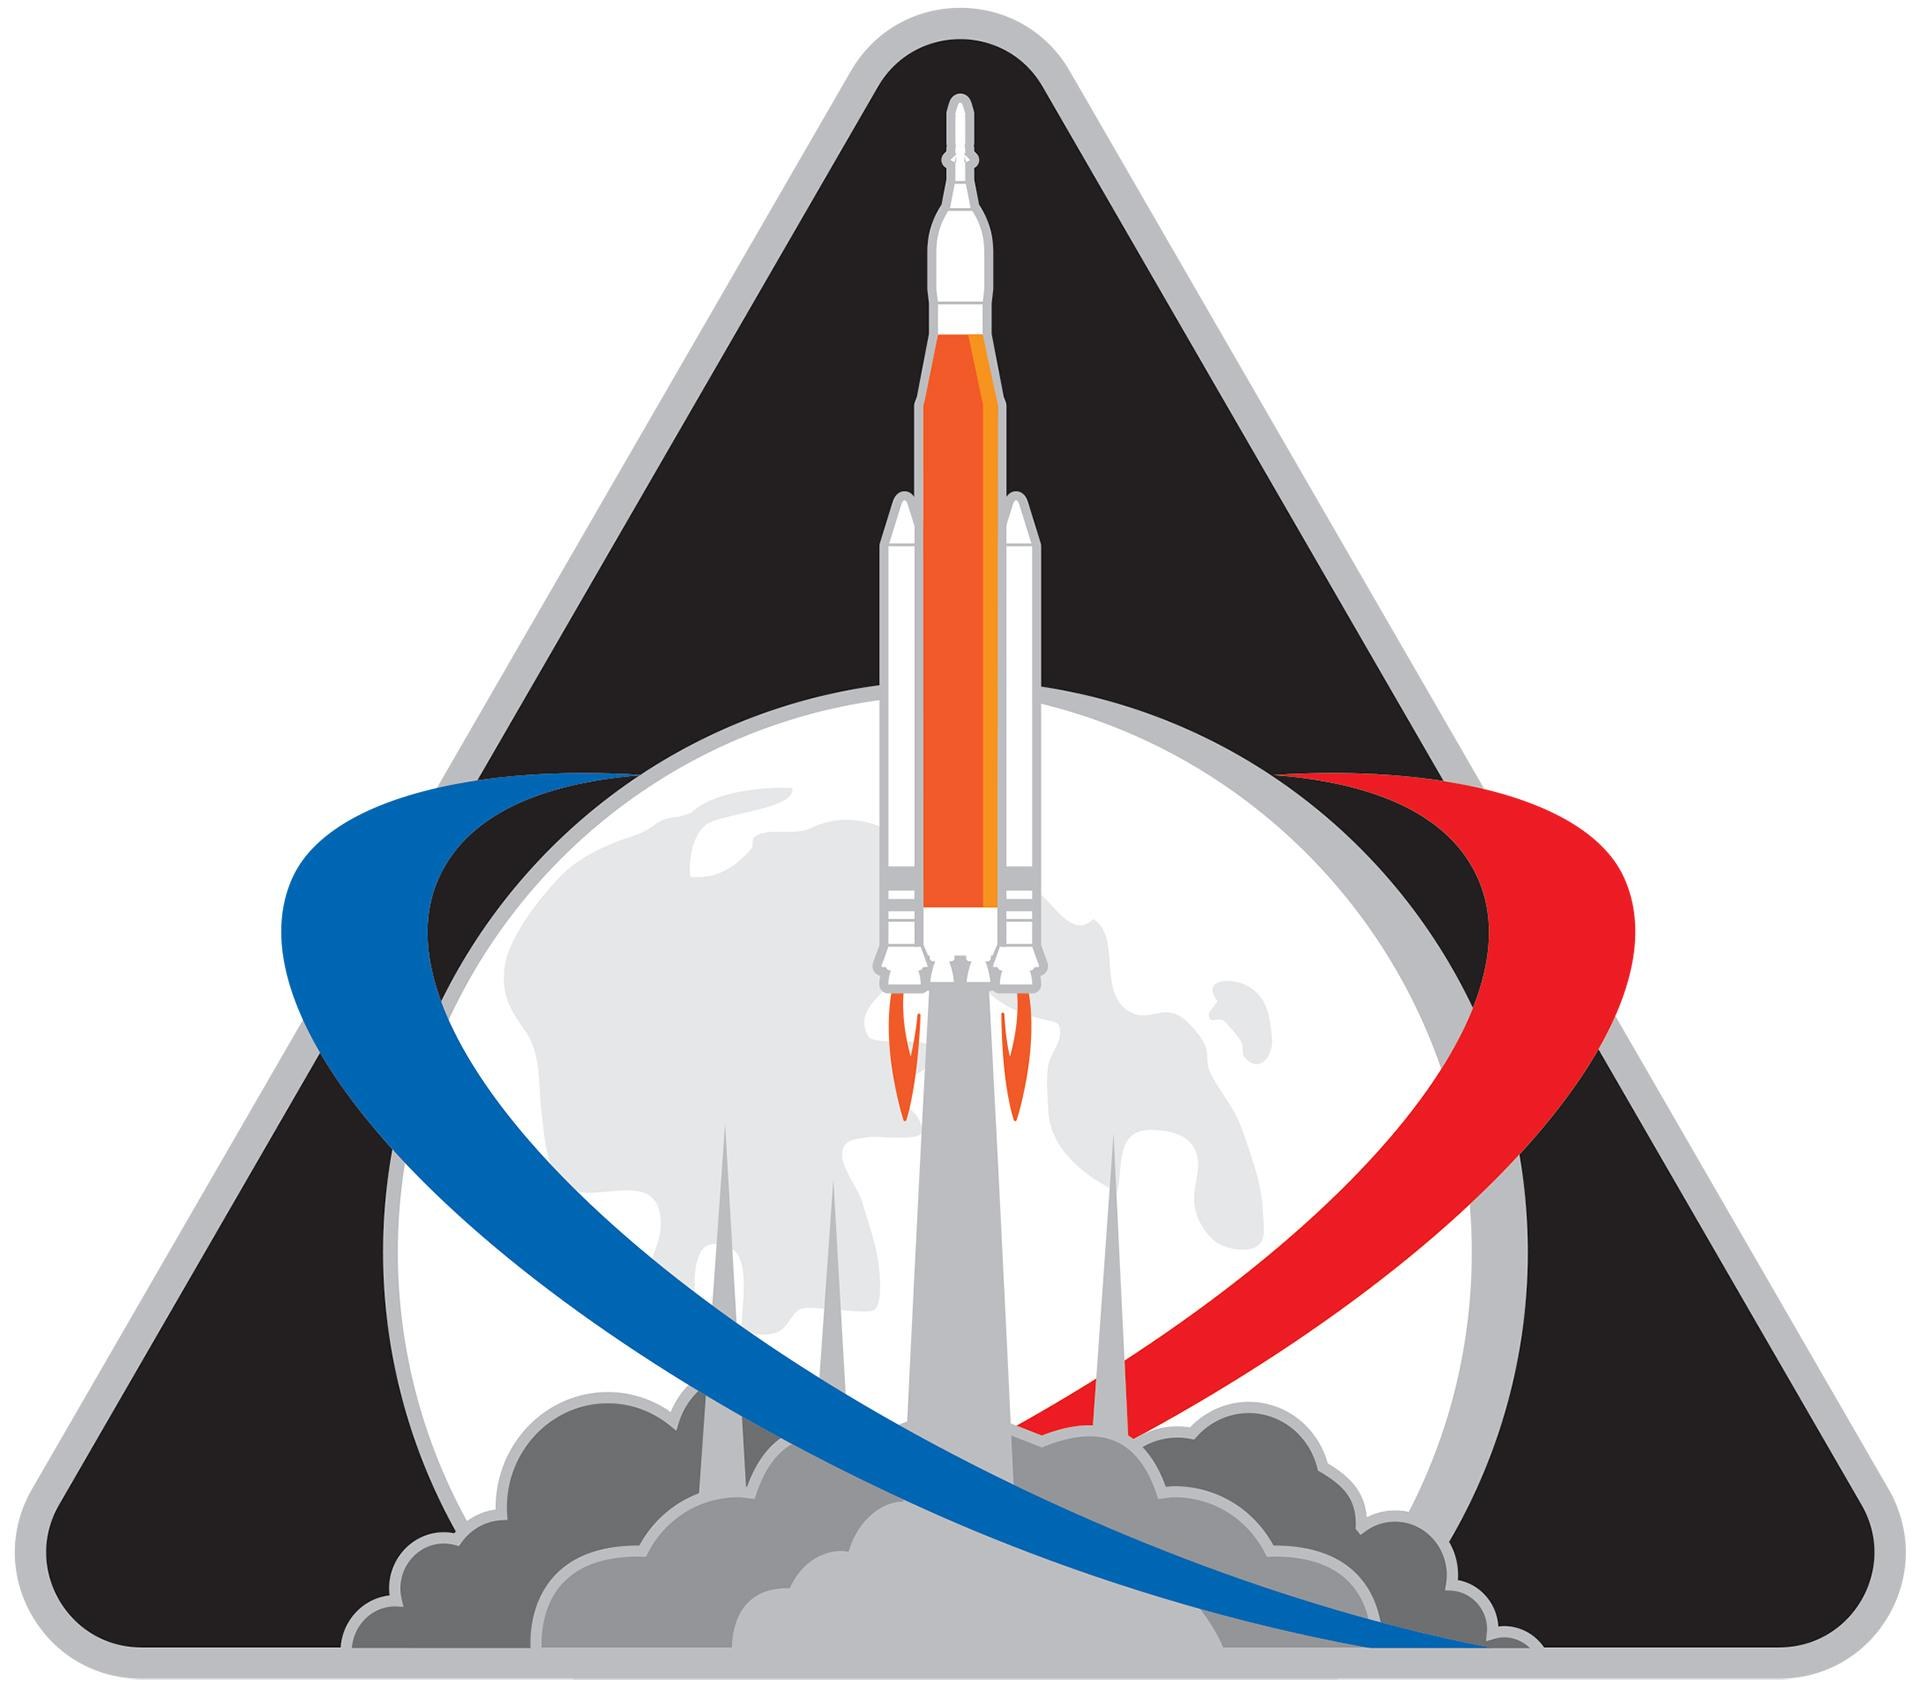 Artemis mission logo